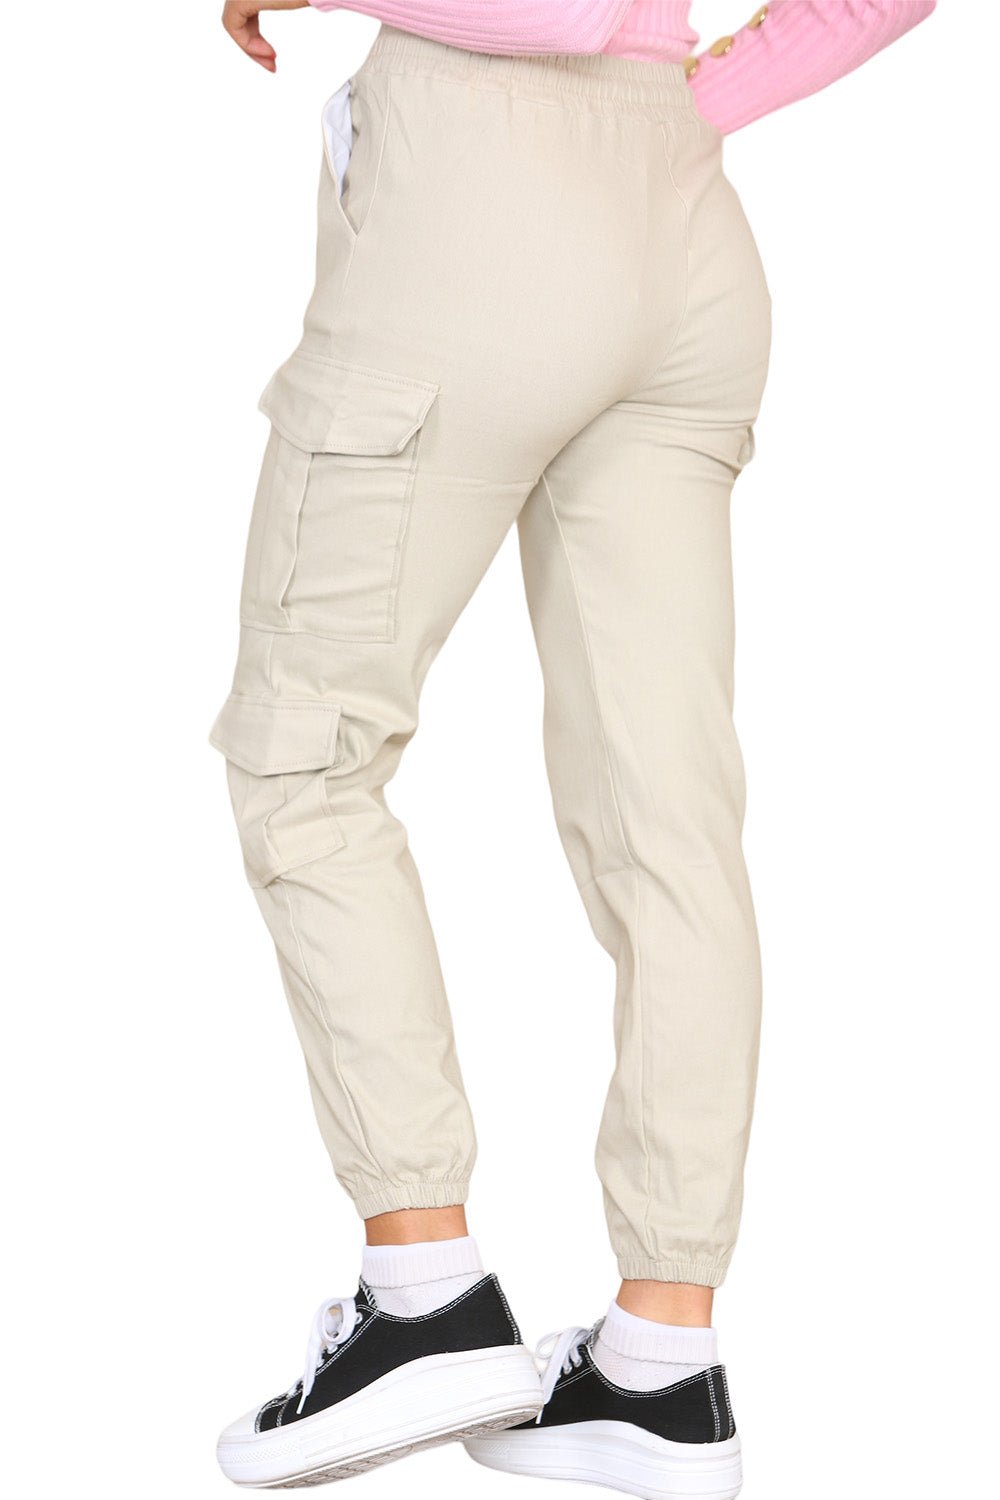 Cargo Pockets Pants Women High Waist Cropped Slim Fit Trouser - Multi Trends